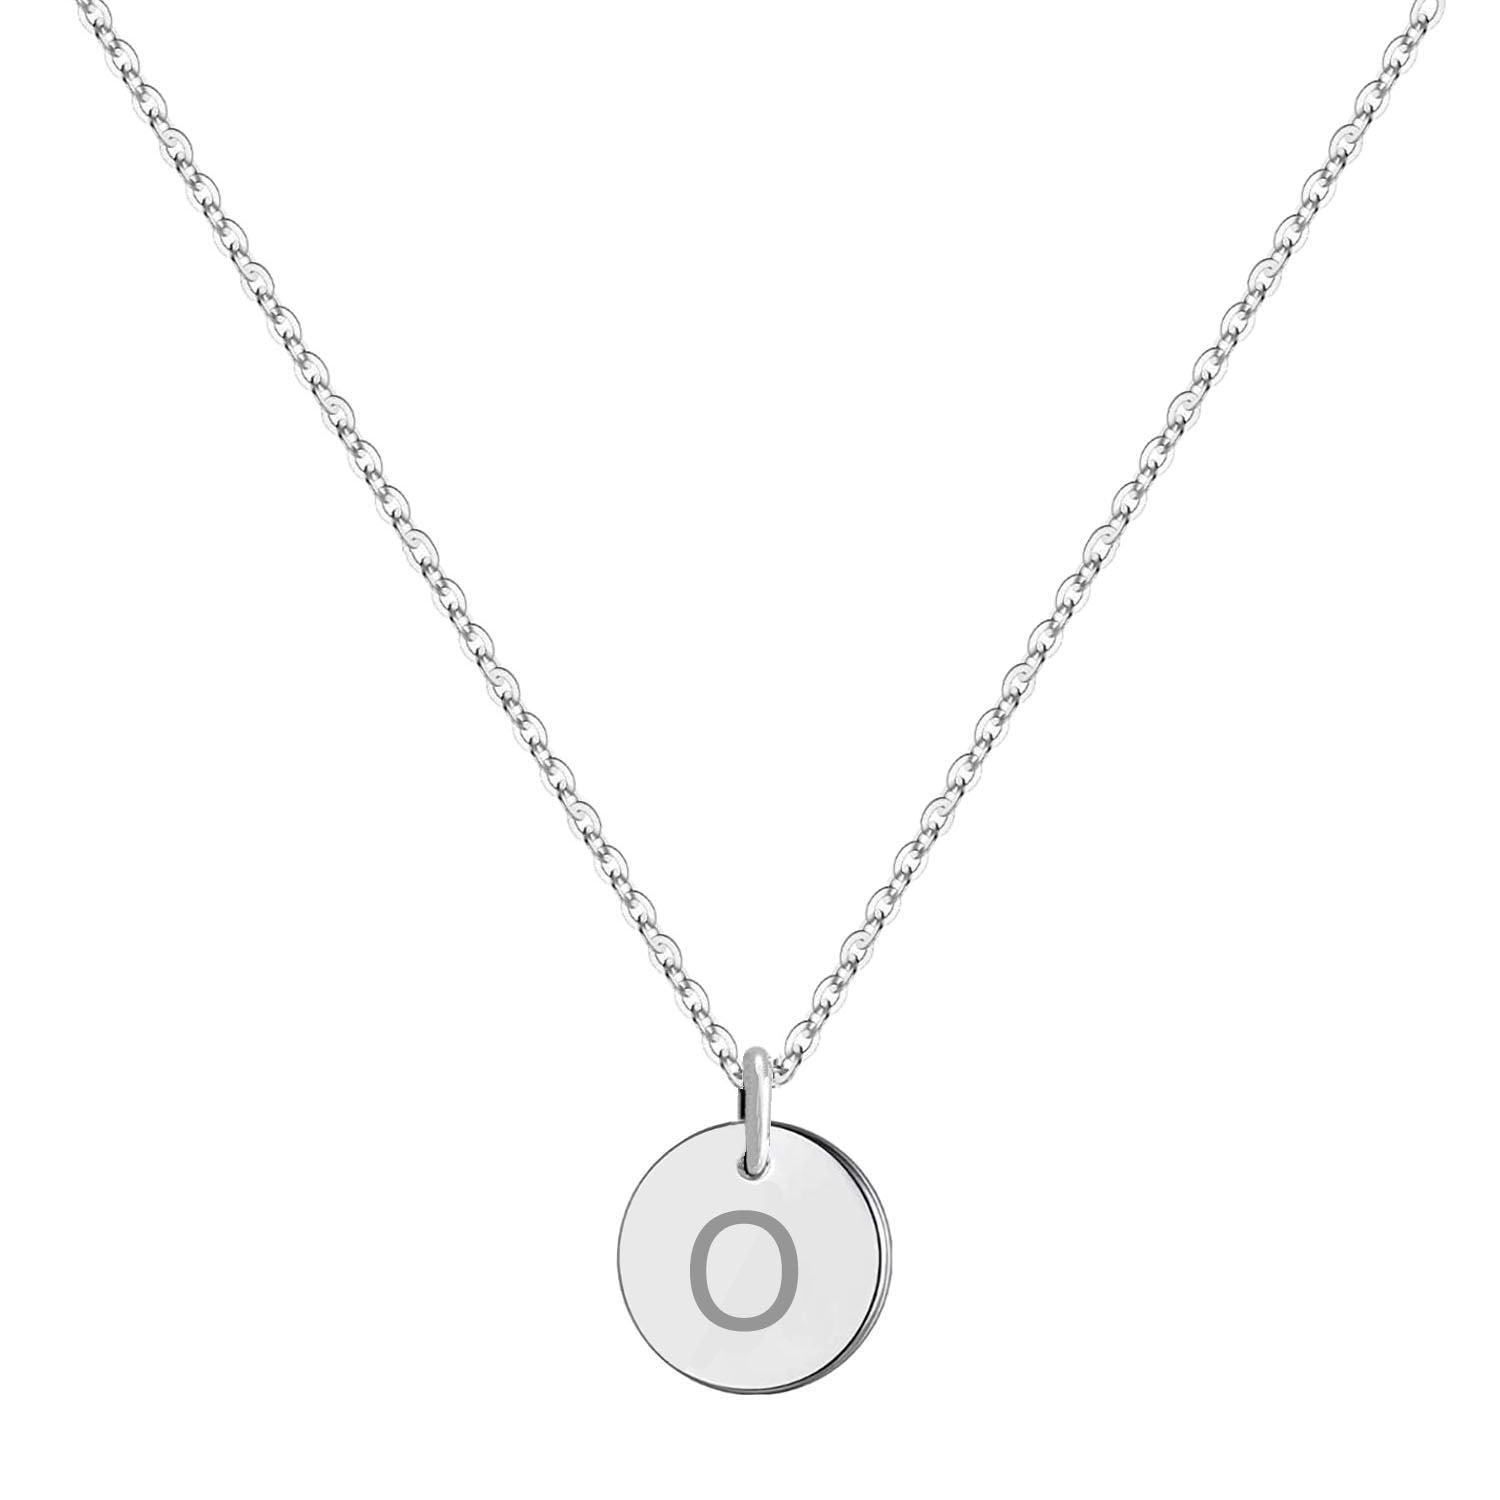 Copper Silver Medallion Charm necklace Pendant Chain Women